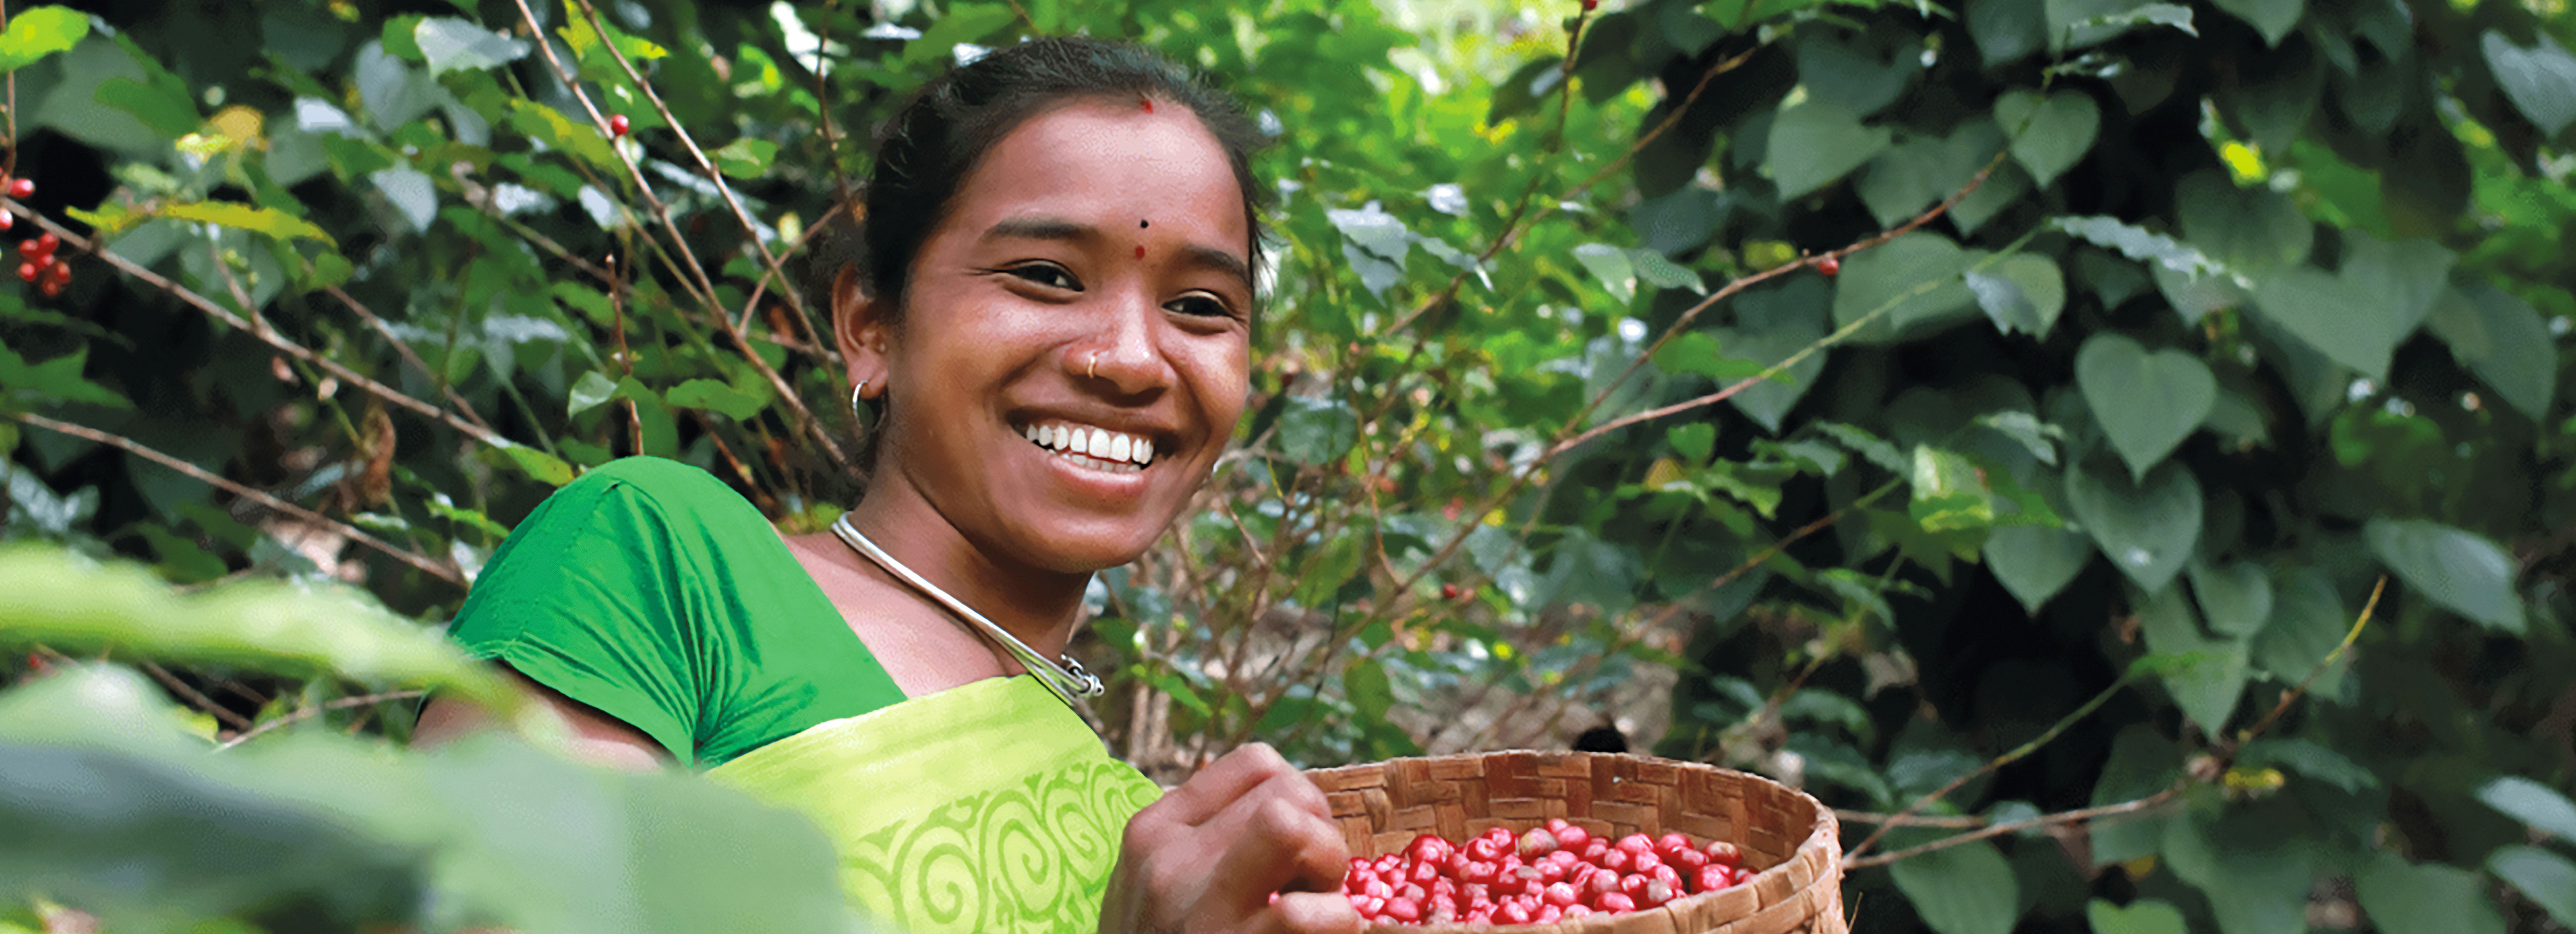 Junge Frau pflückt Kaffee Bohnen in Indien (Araku)